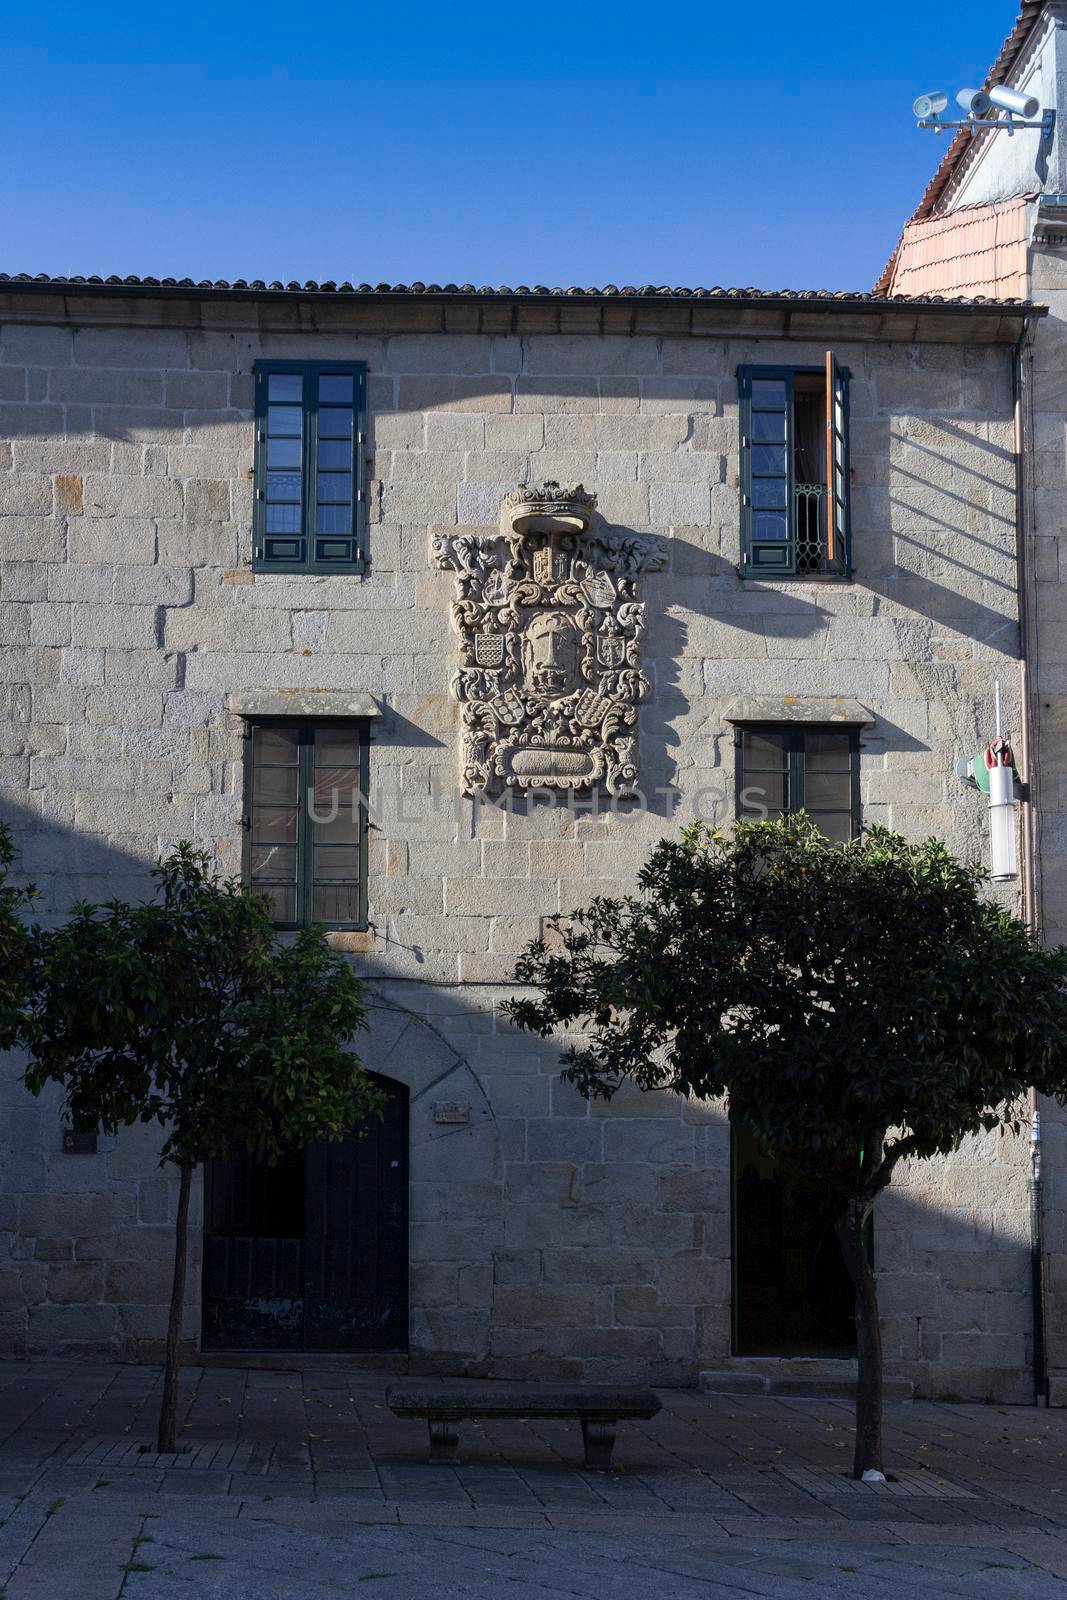 Stone buildings, in Galicia Spain by loopneo